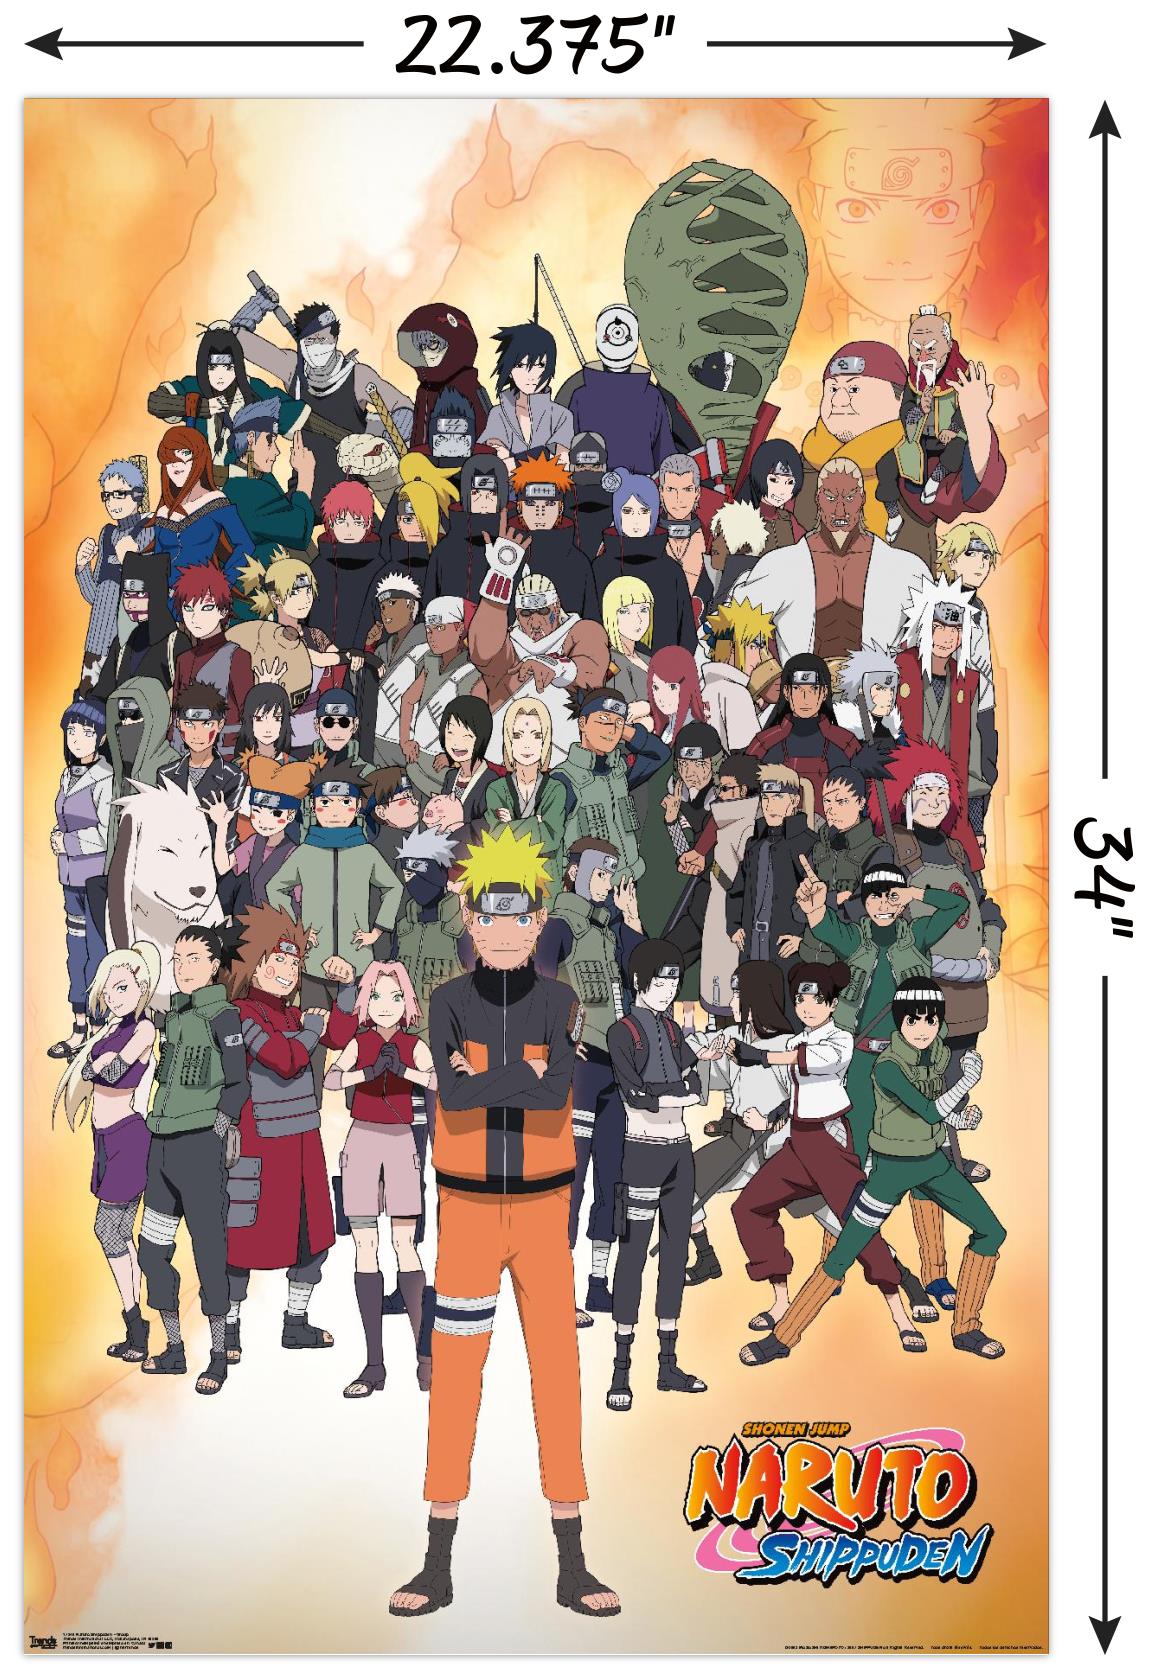 Naruto Shippuden - Group Wall Poster, 22.375" x 34" - image 3 of 4